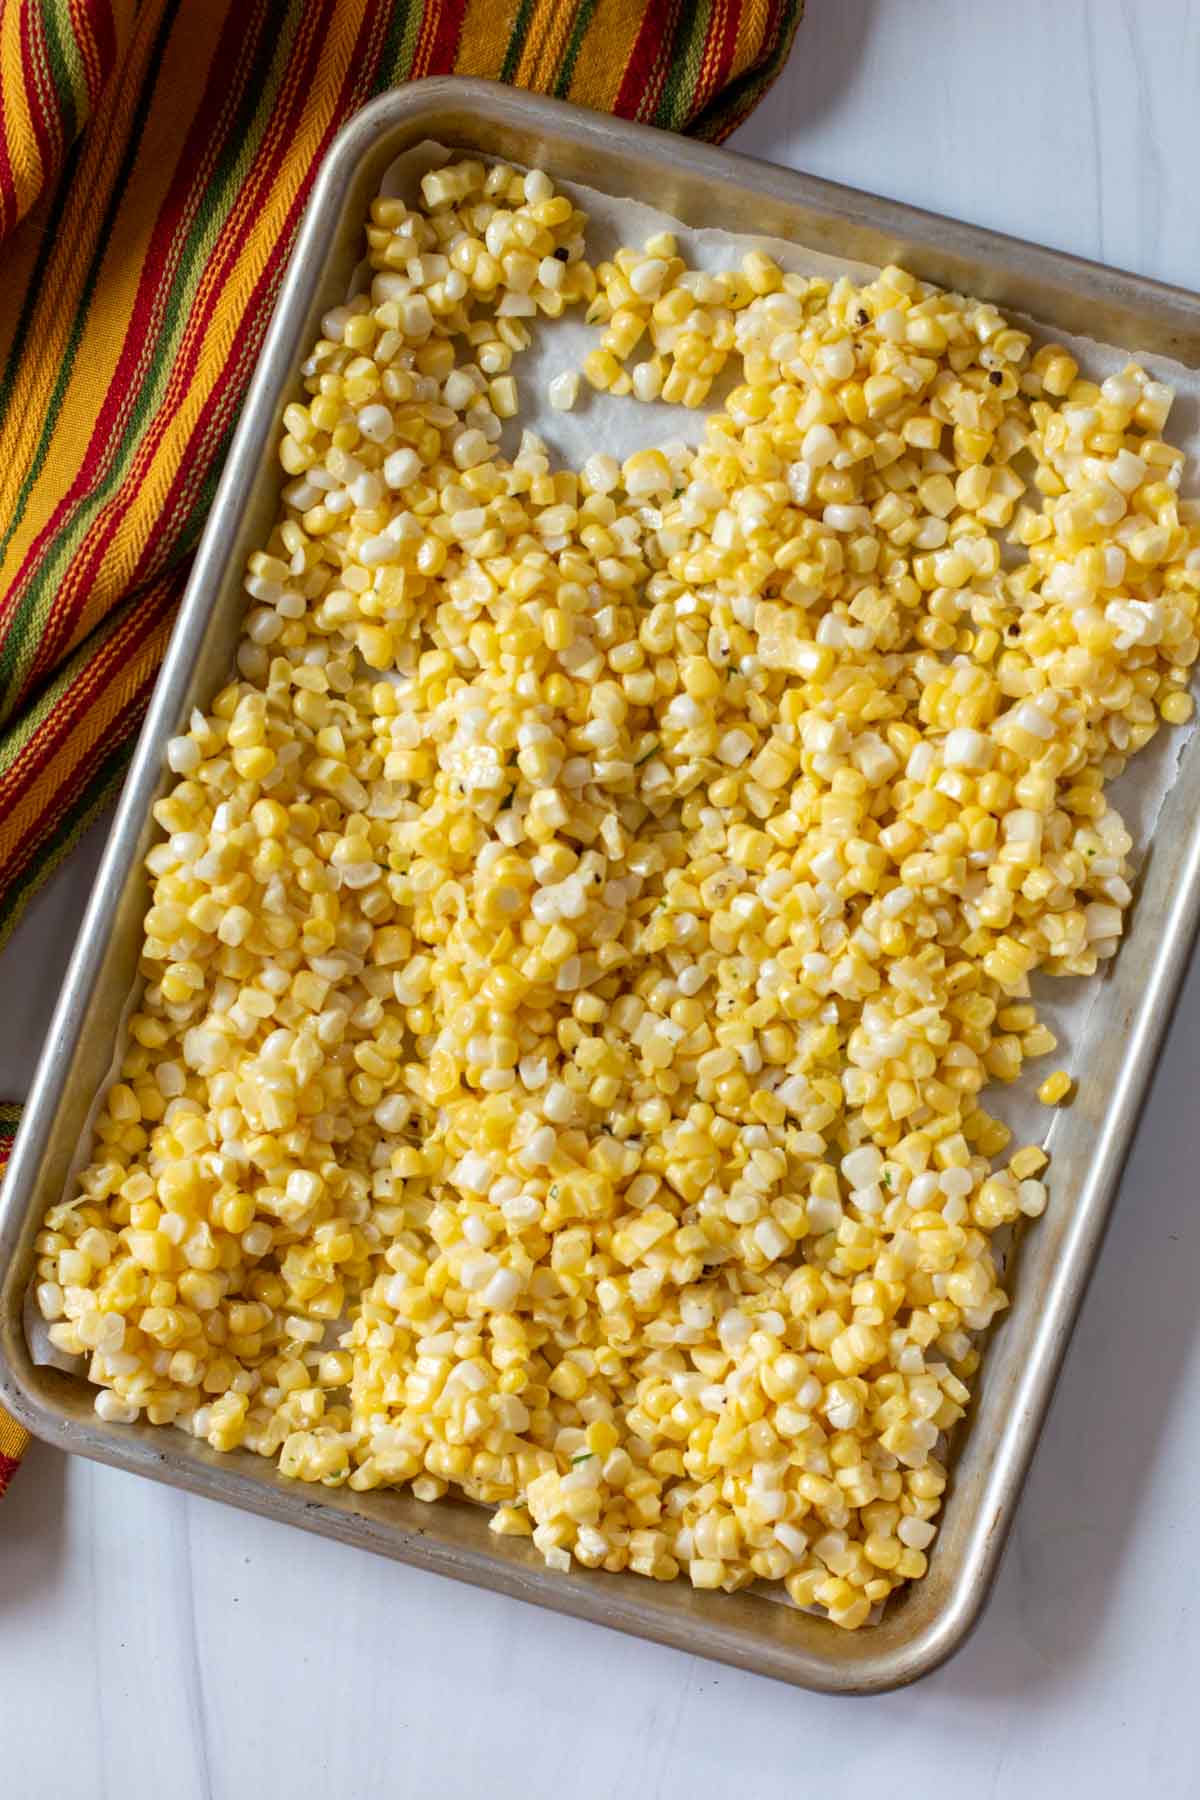 Corn kernels on a sheet pan.